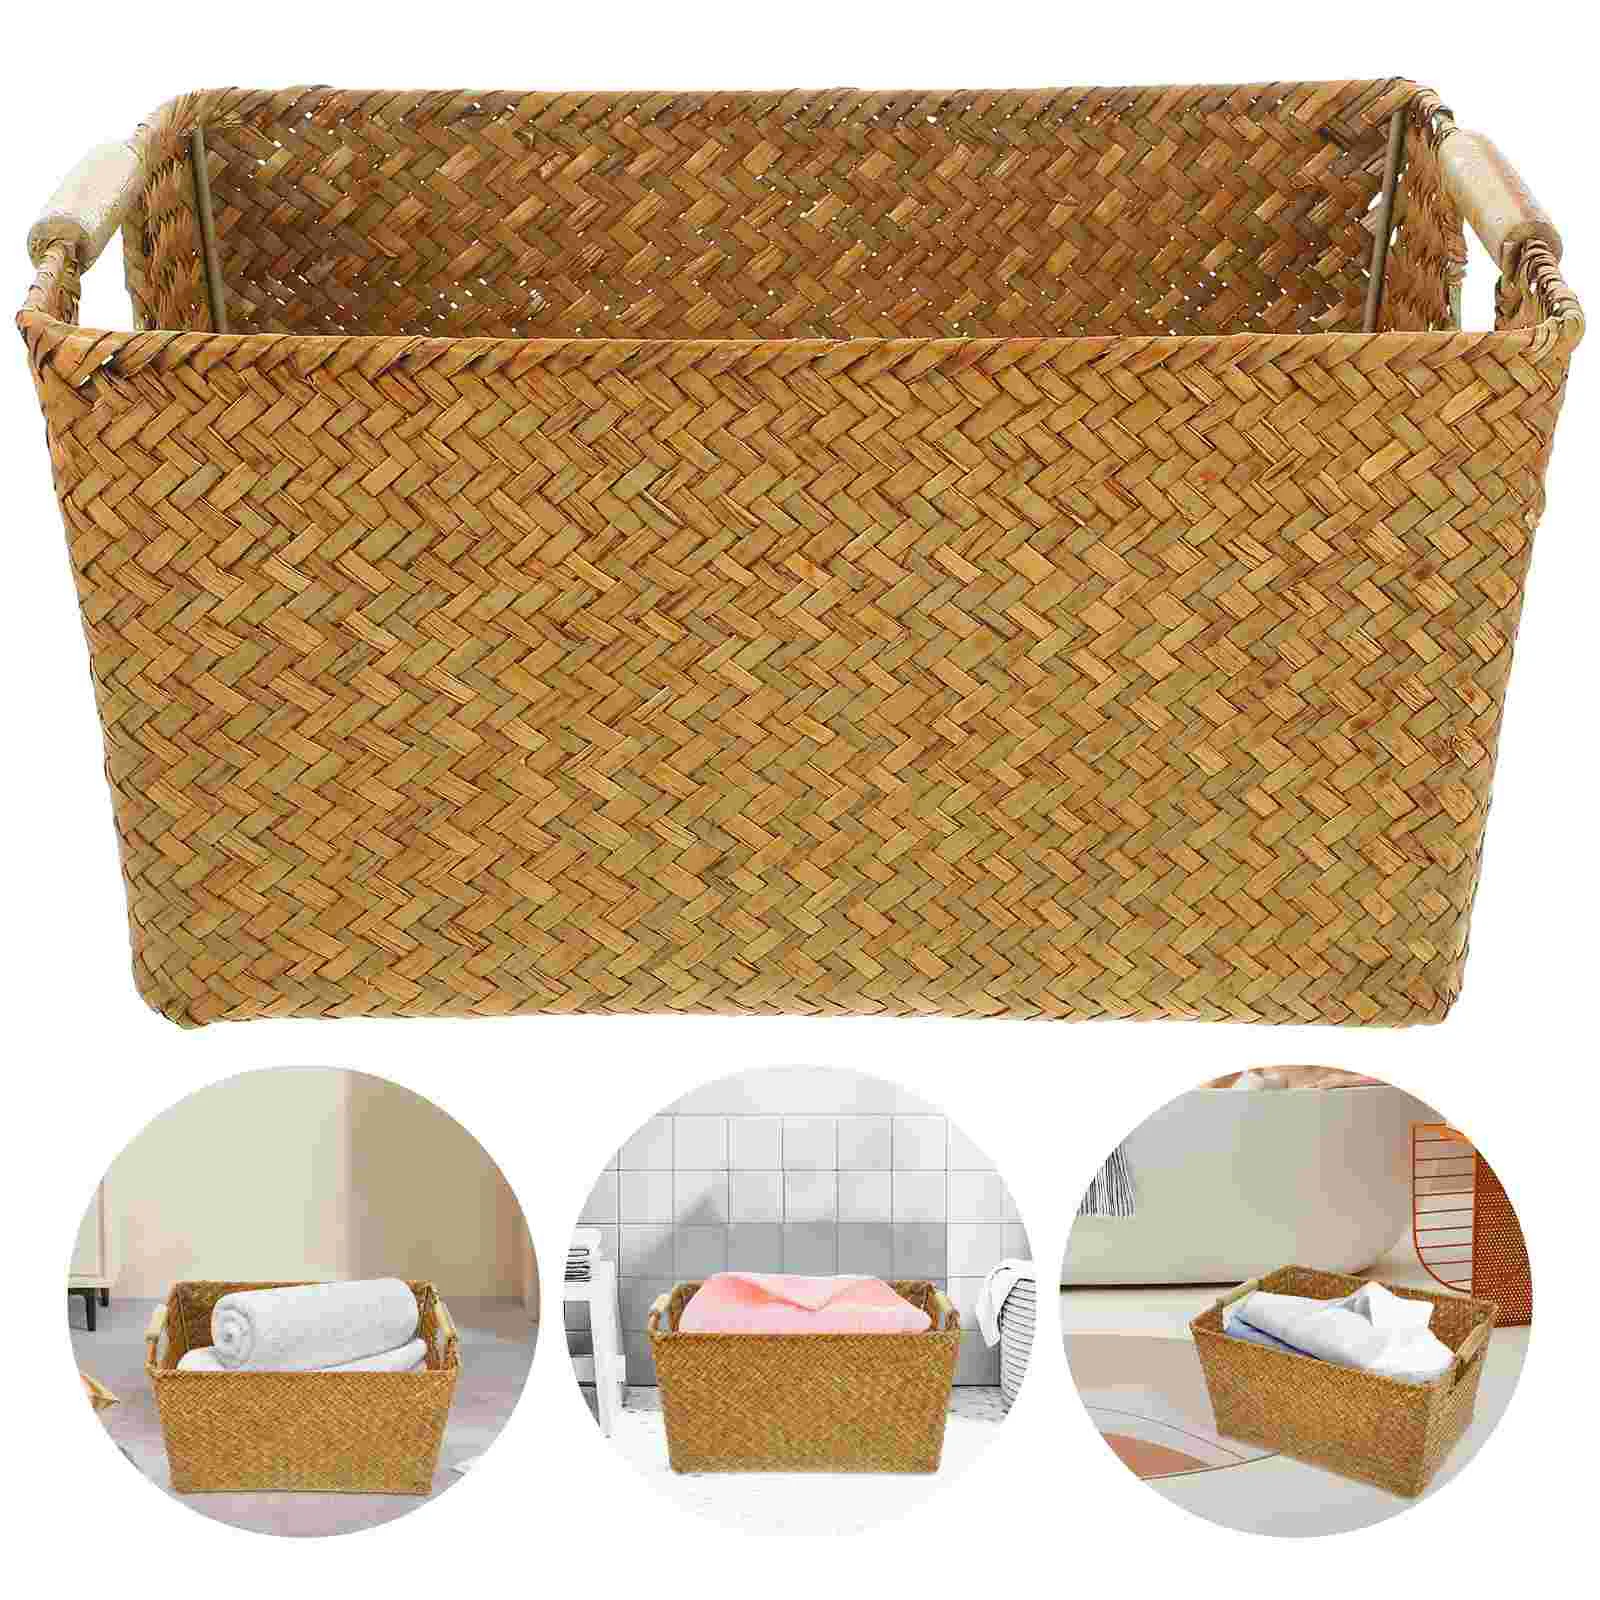 

Woven Storage Basket Desktop Toy Case Weaving Portable Rustic Bins Organizer Baskets